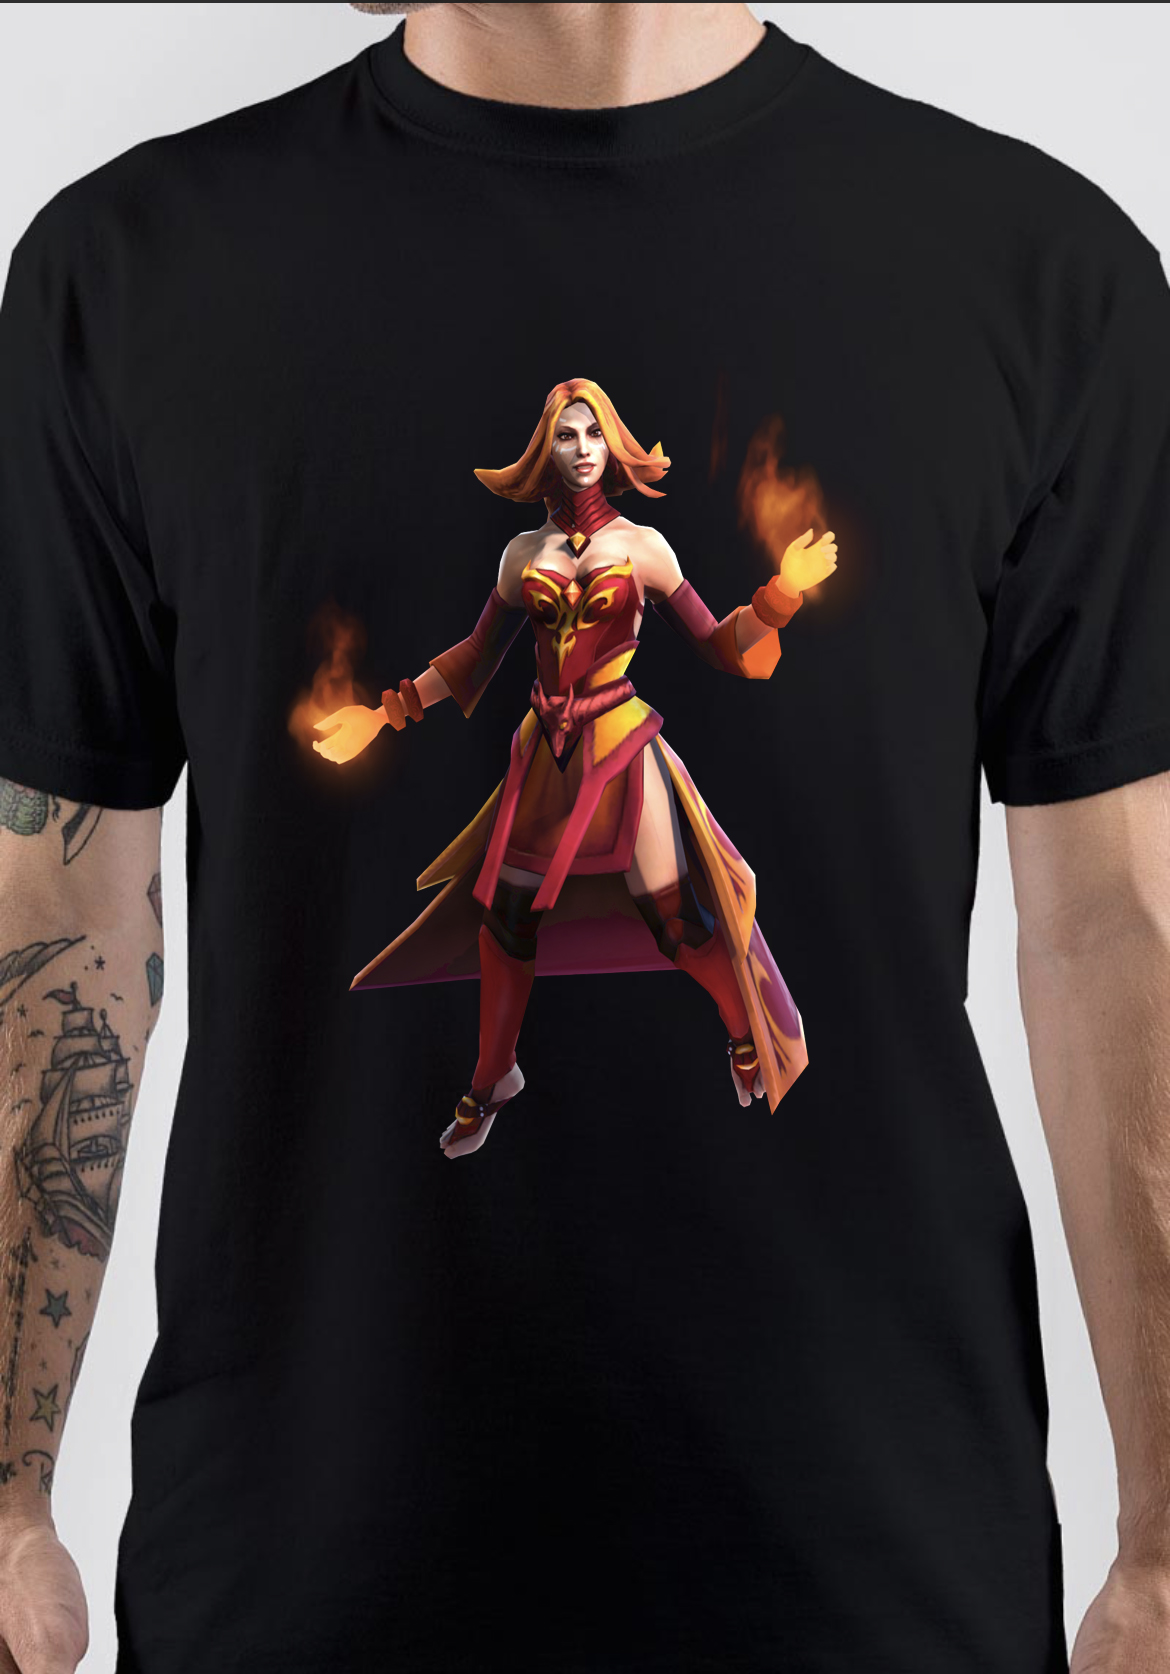 Lina Dota T-Shirt And Merchandise